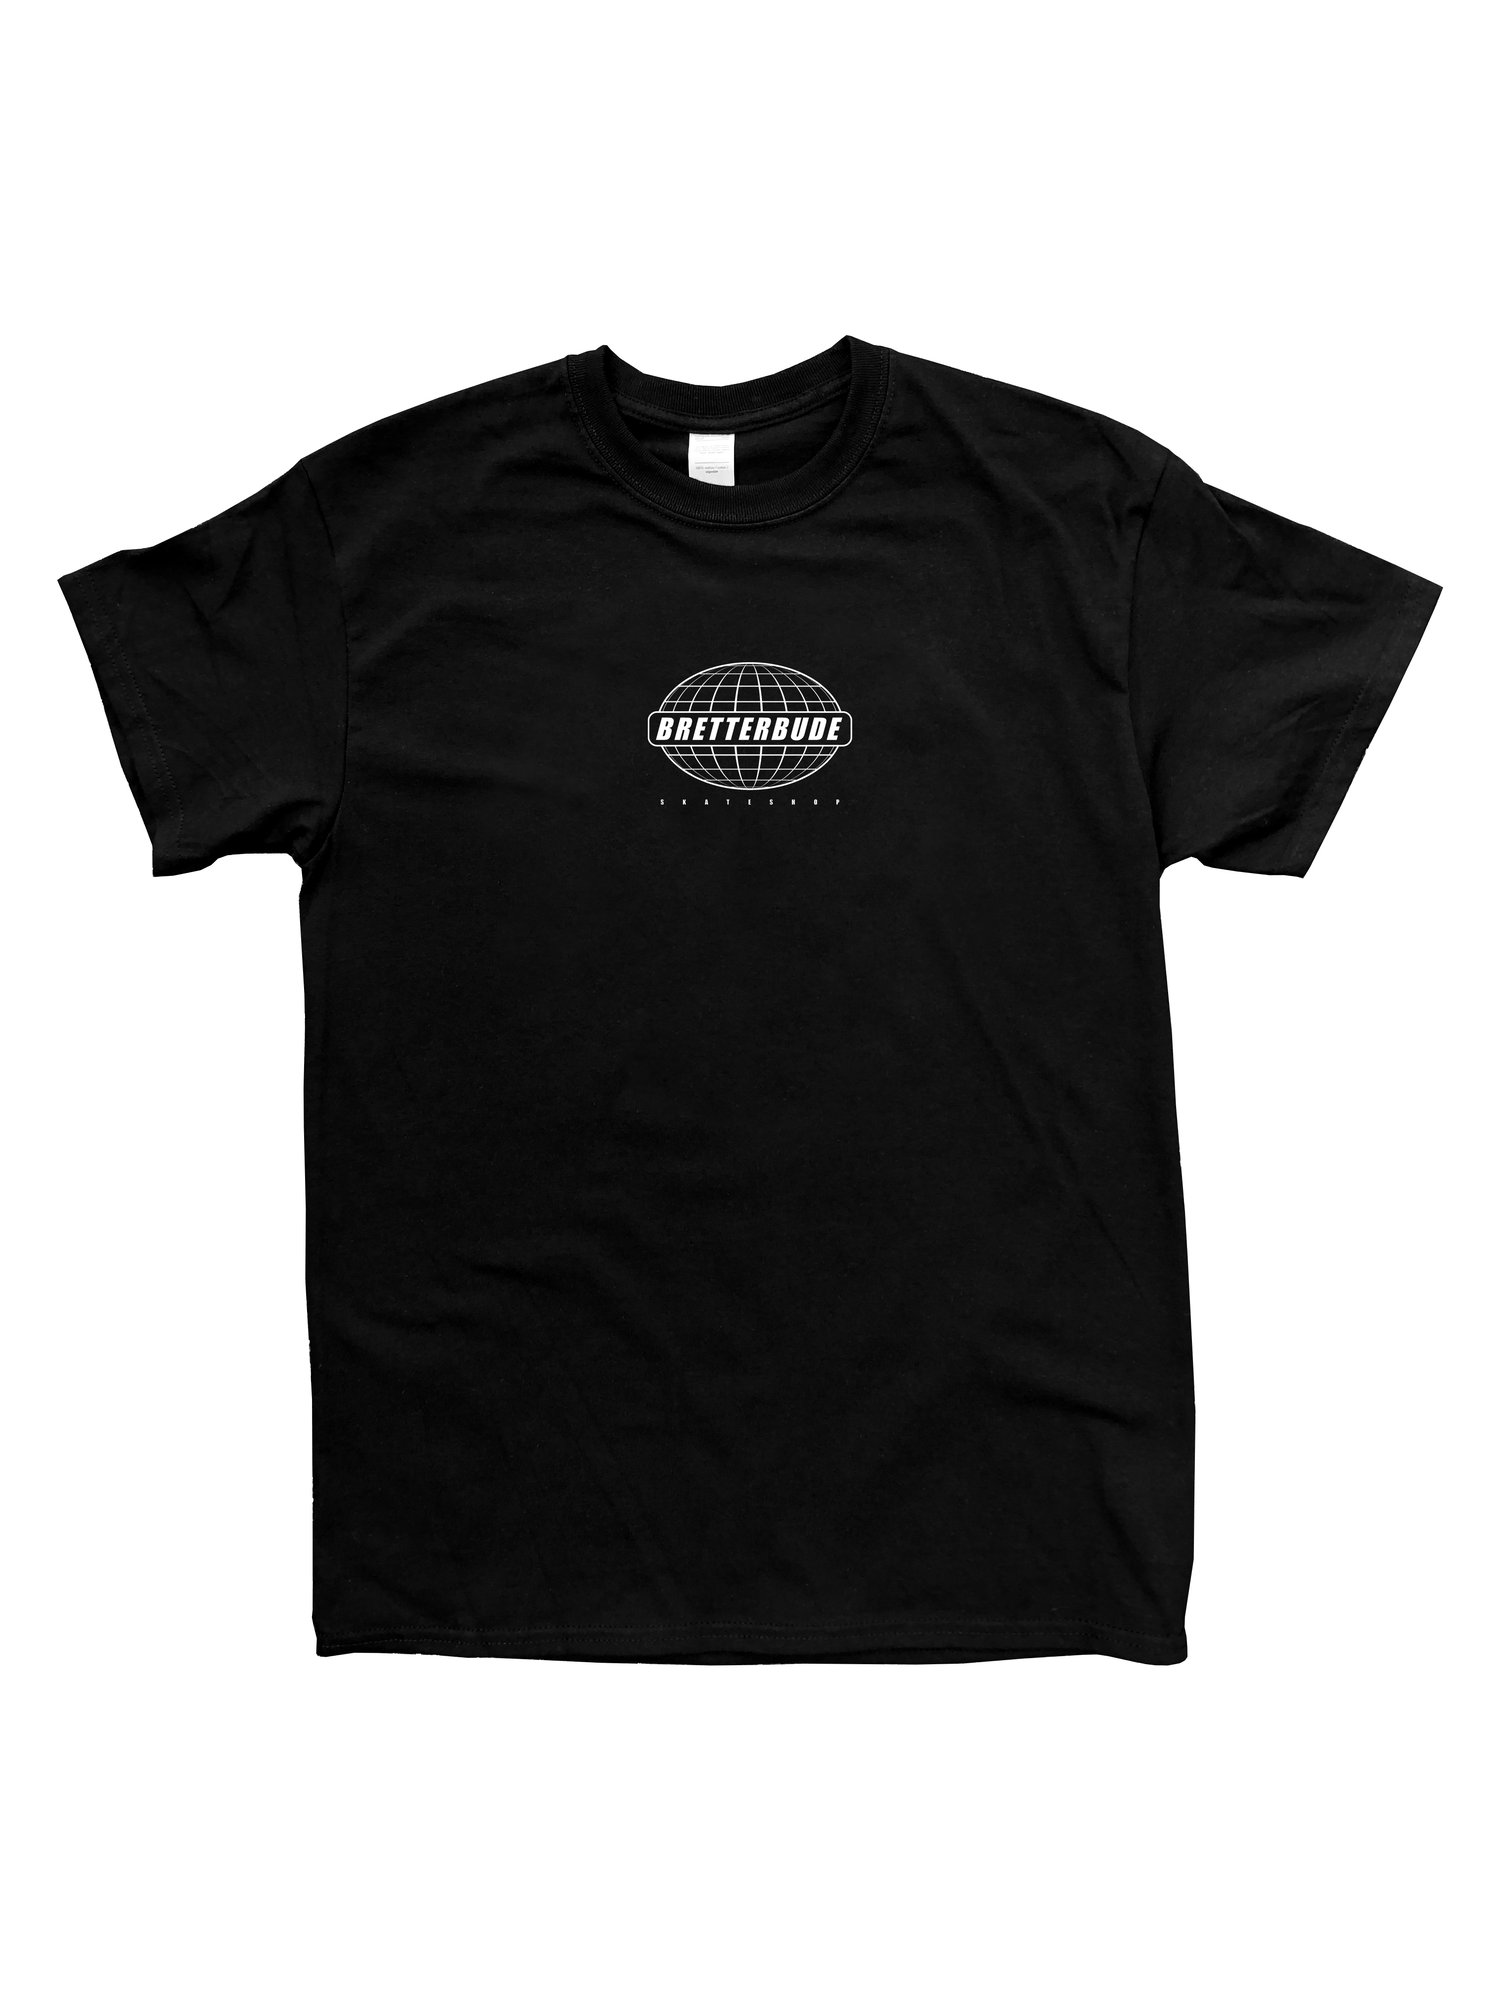 Image of Bretterbude Globus T-Shirt (Black)